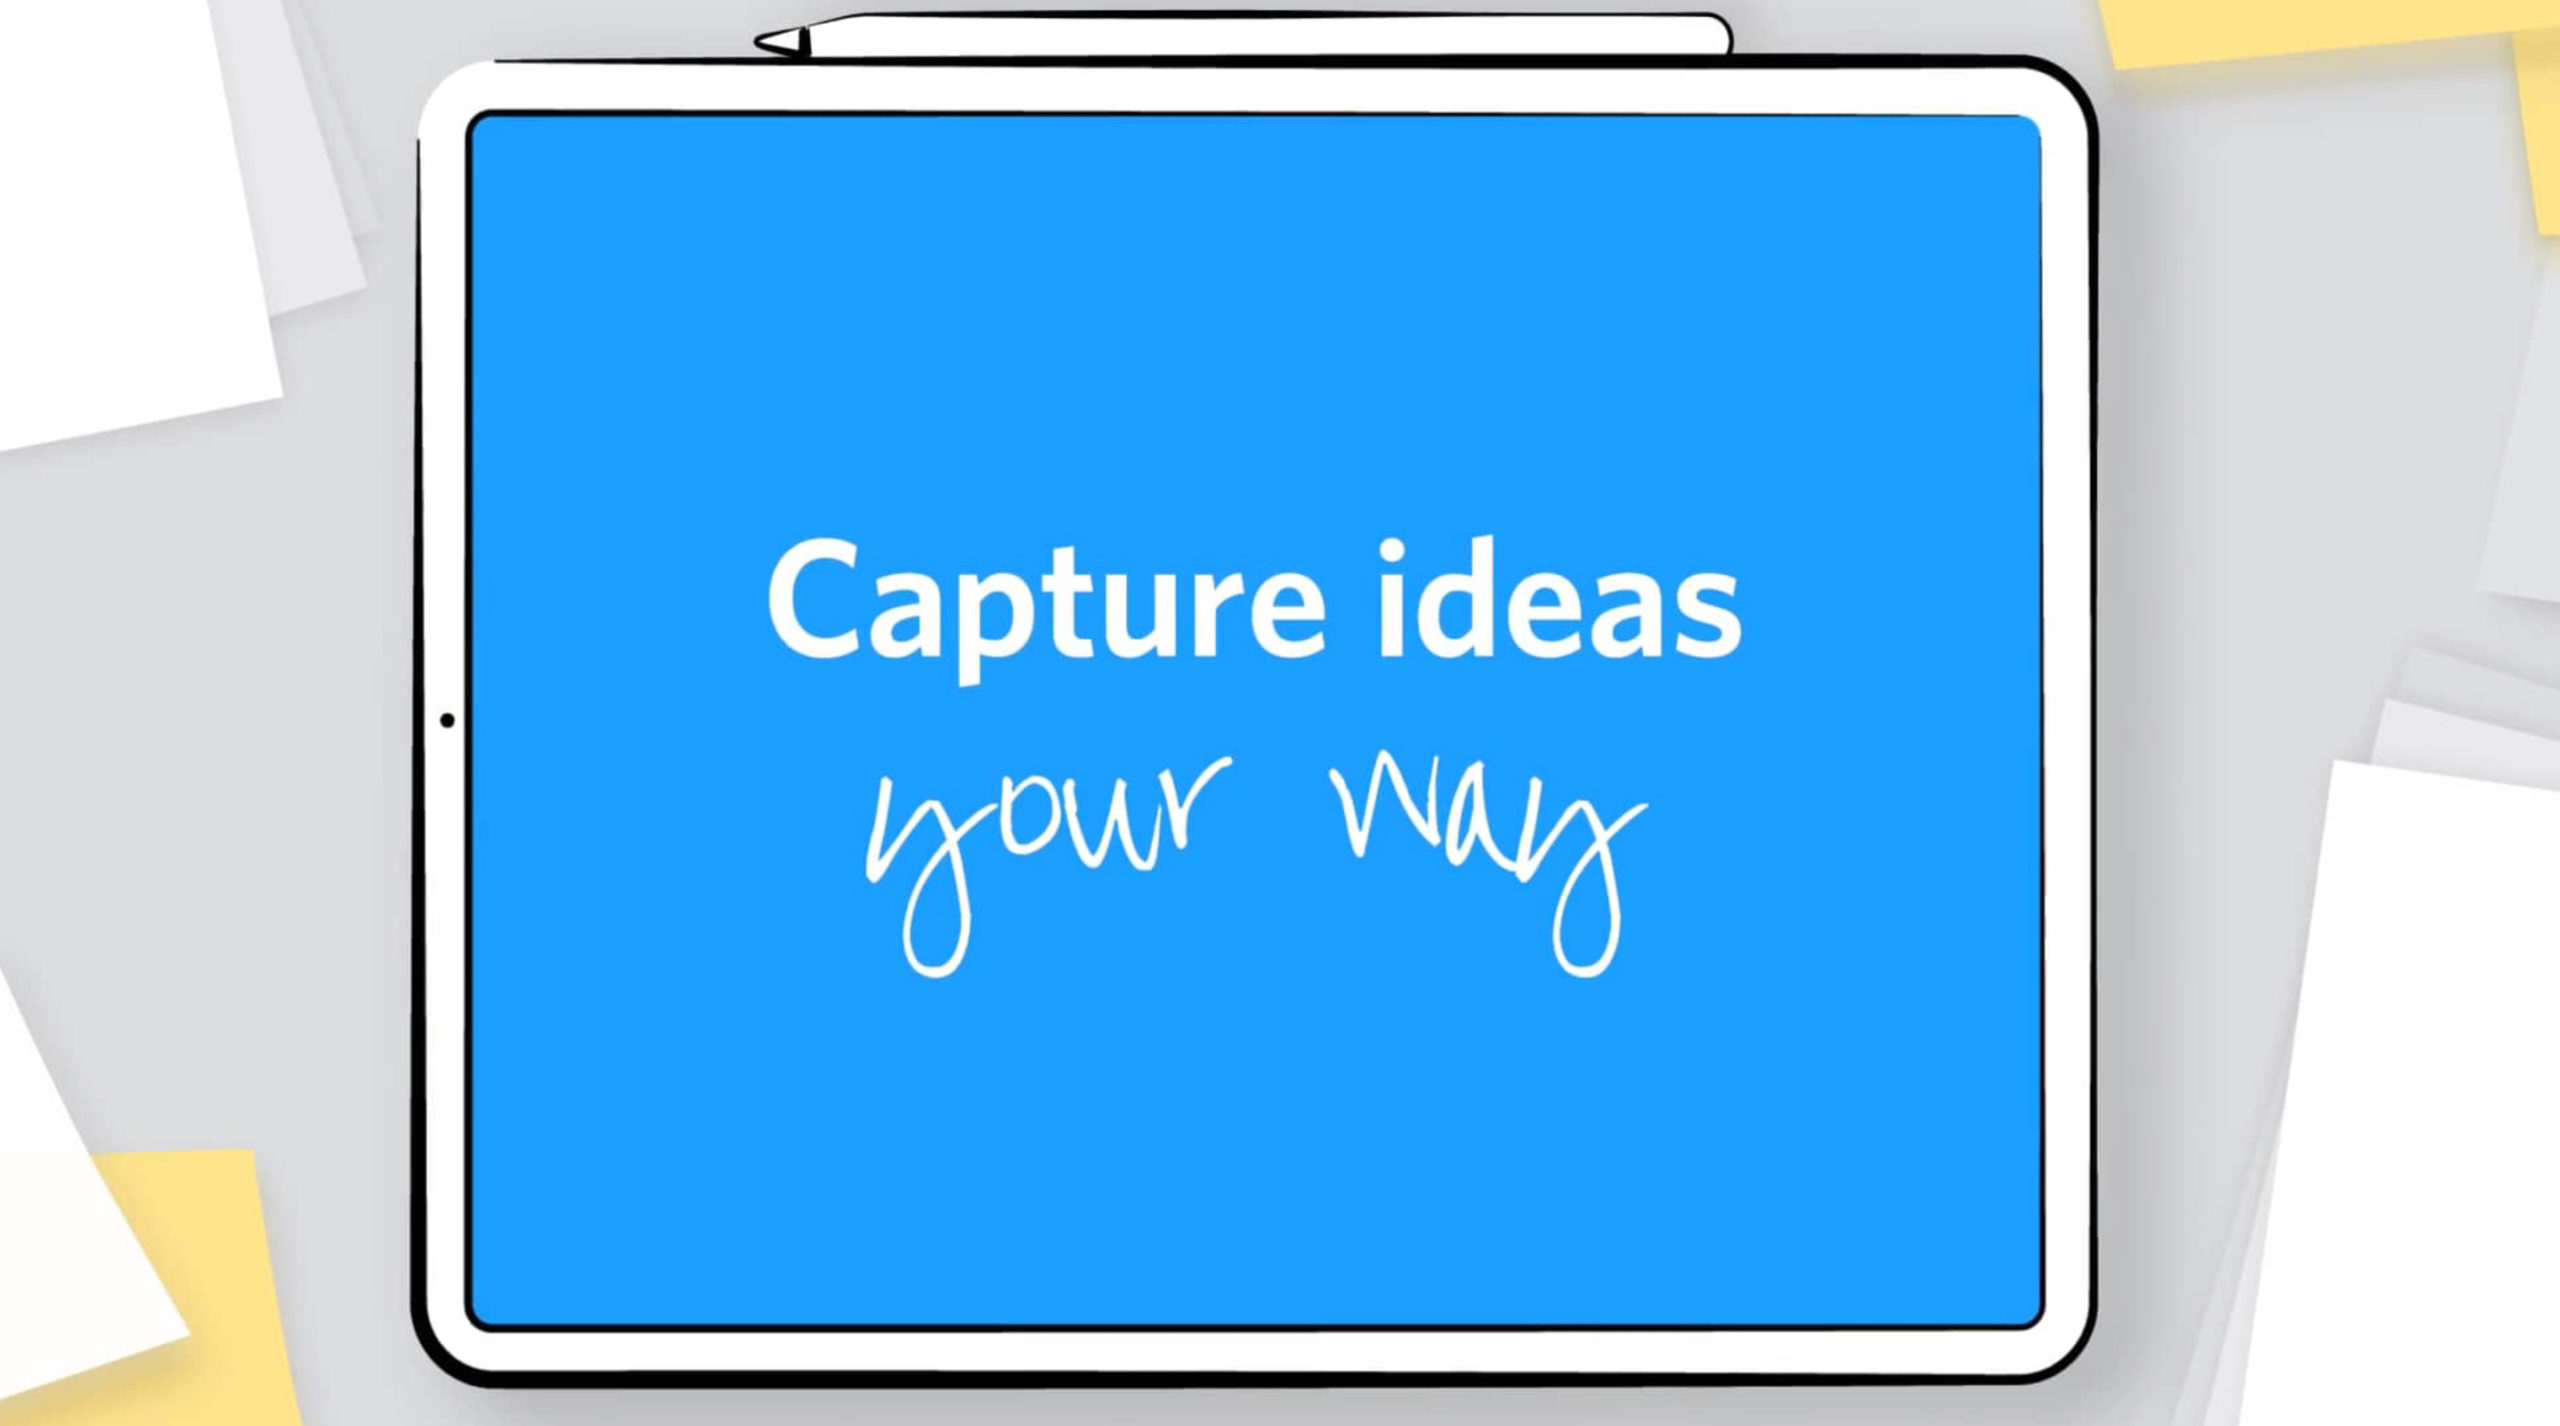 Capture ideas your way